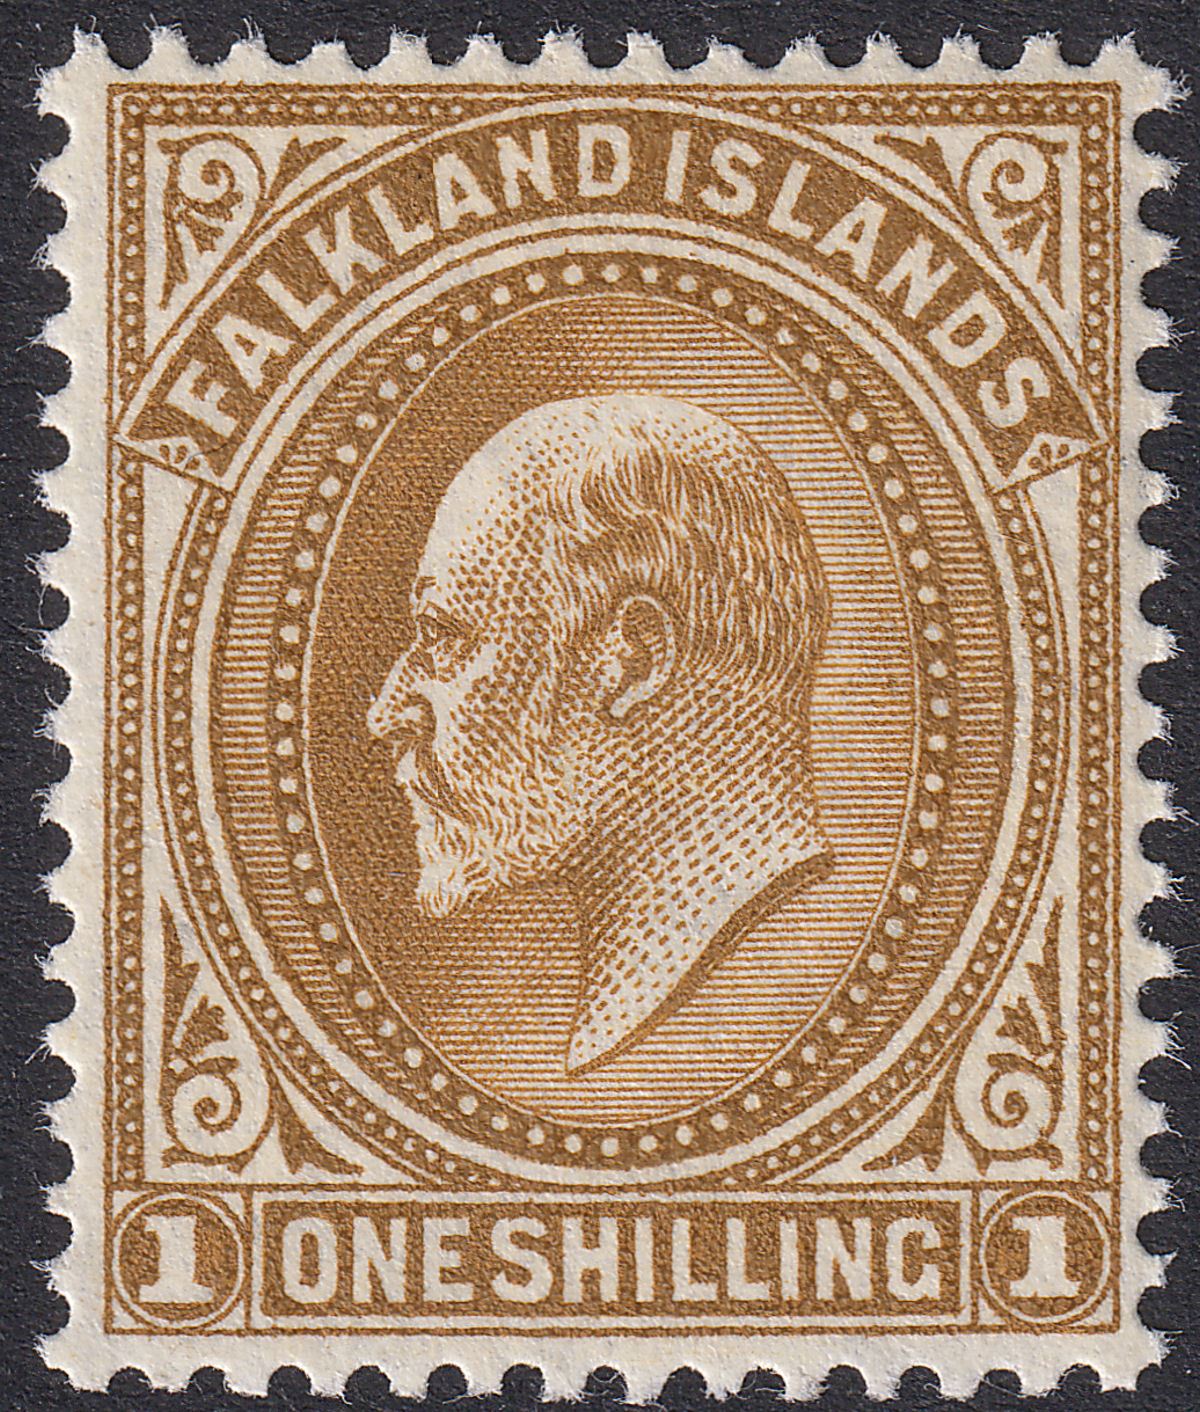 Falkland Islands 1904 KEVII 1sh Brown UM Mint SG48 cat £50